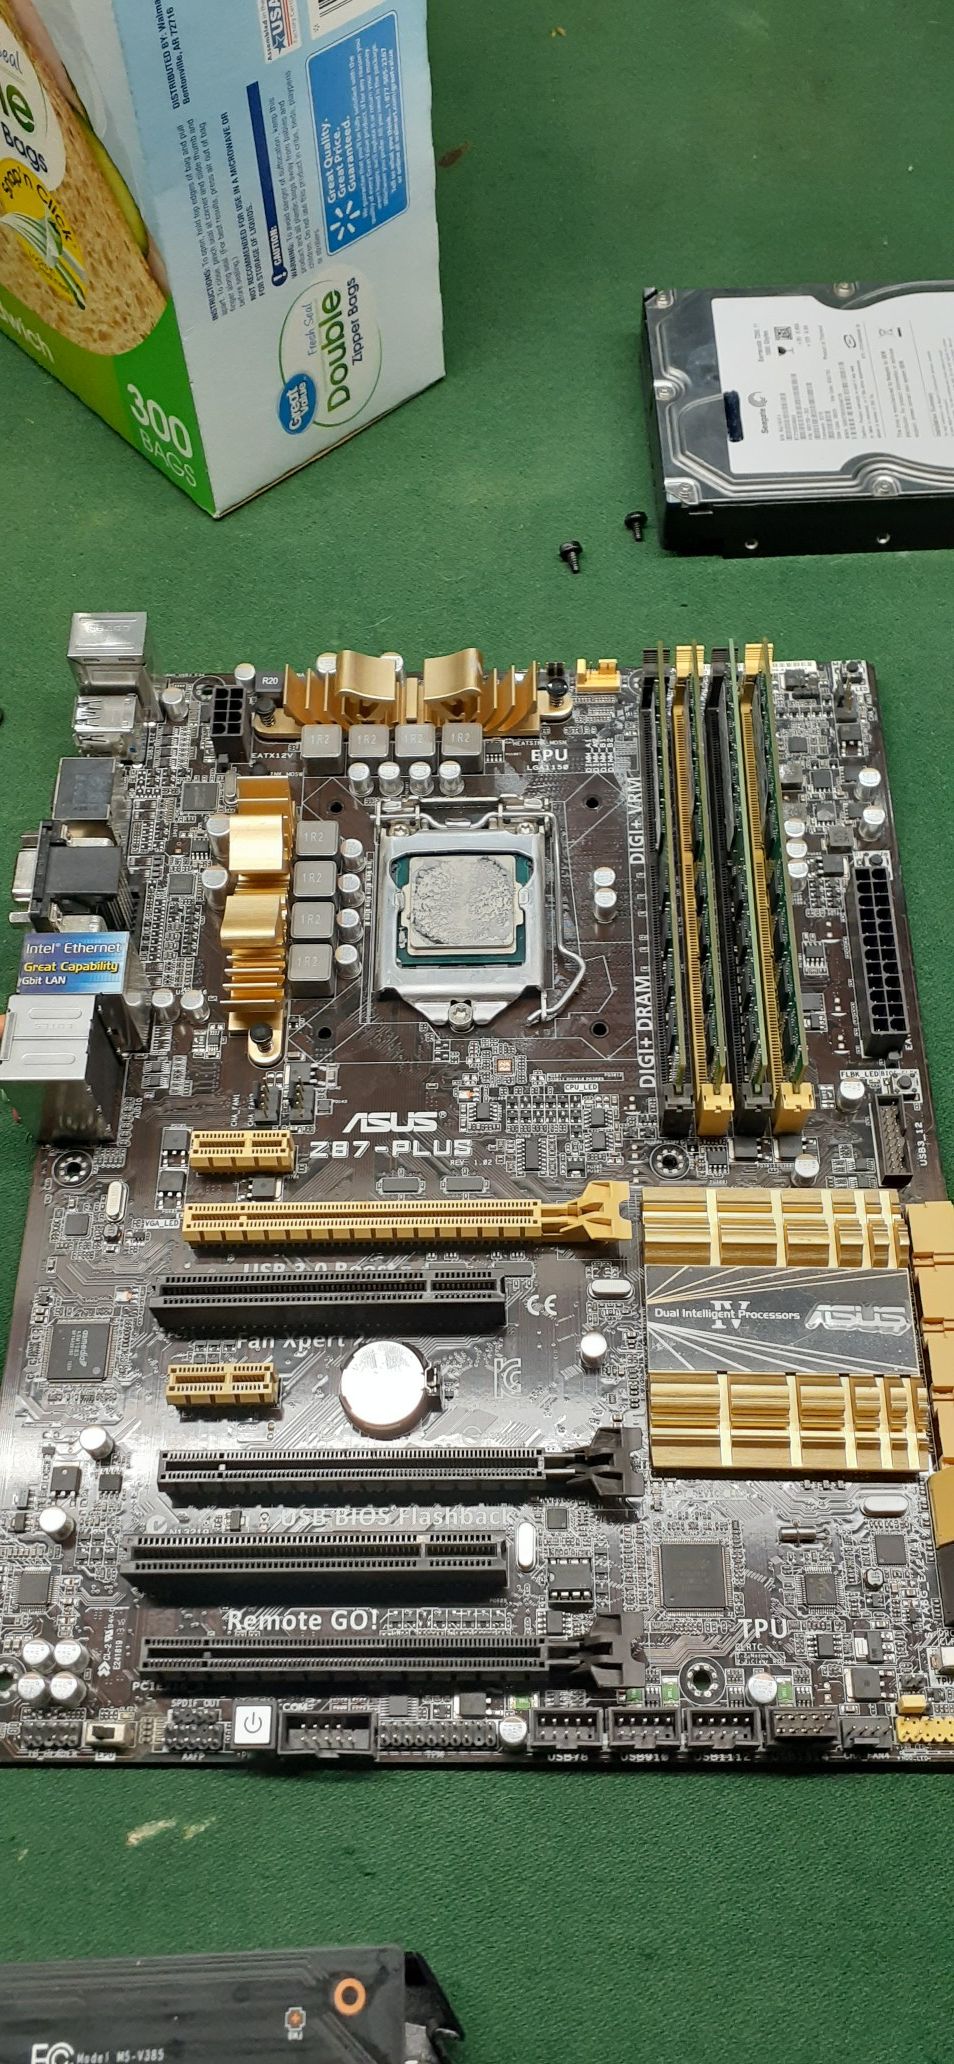 Computer parts GPU, Processor and Motherboard.